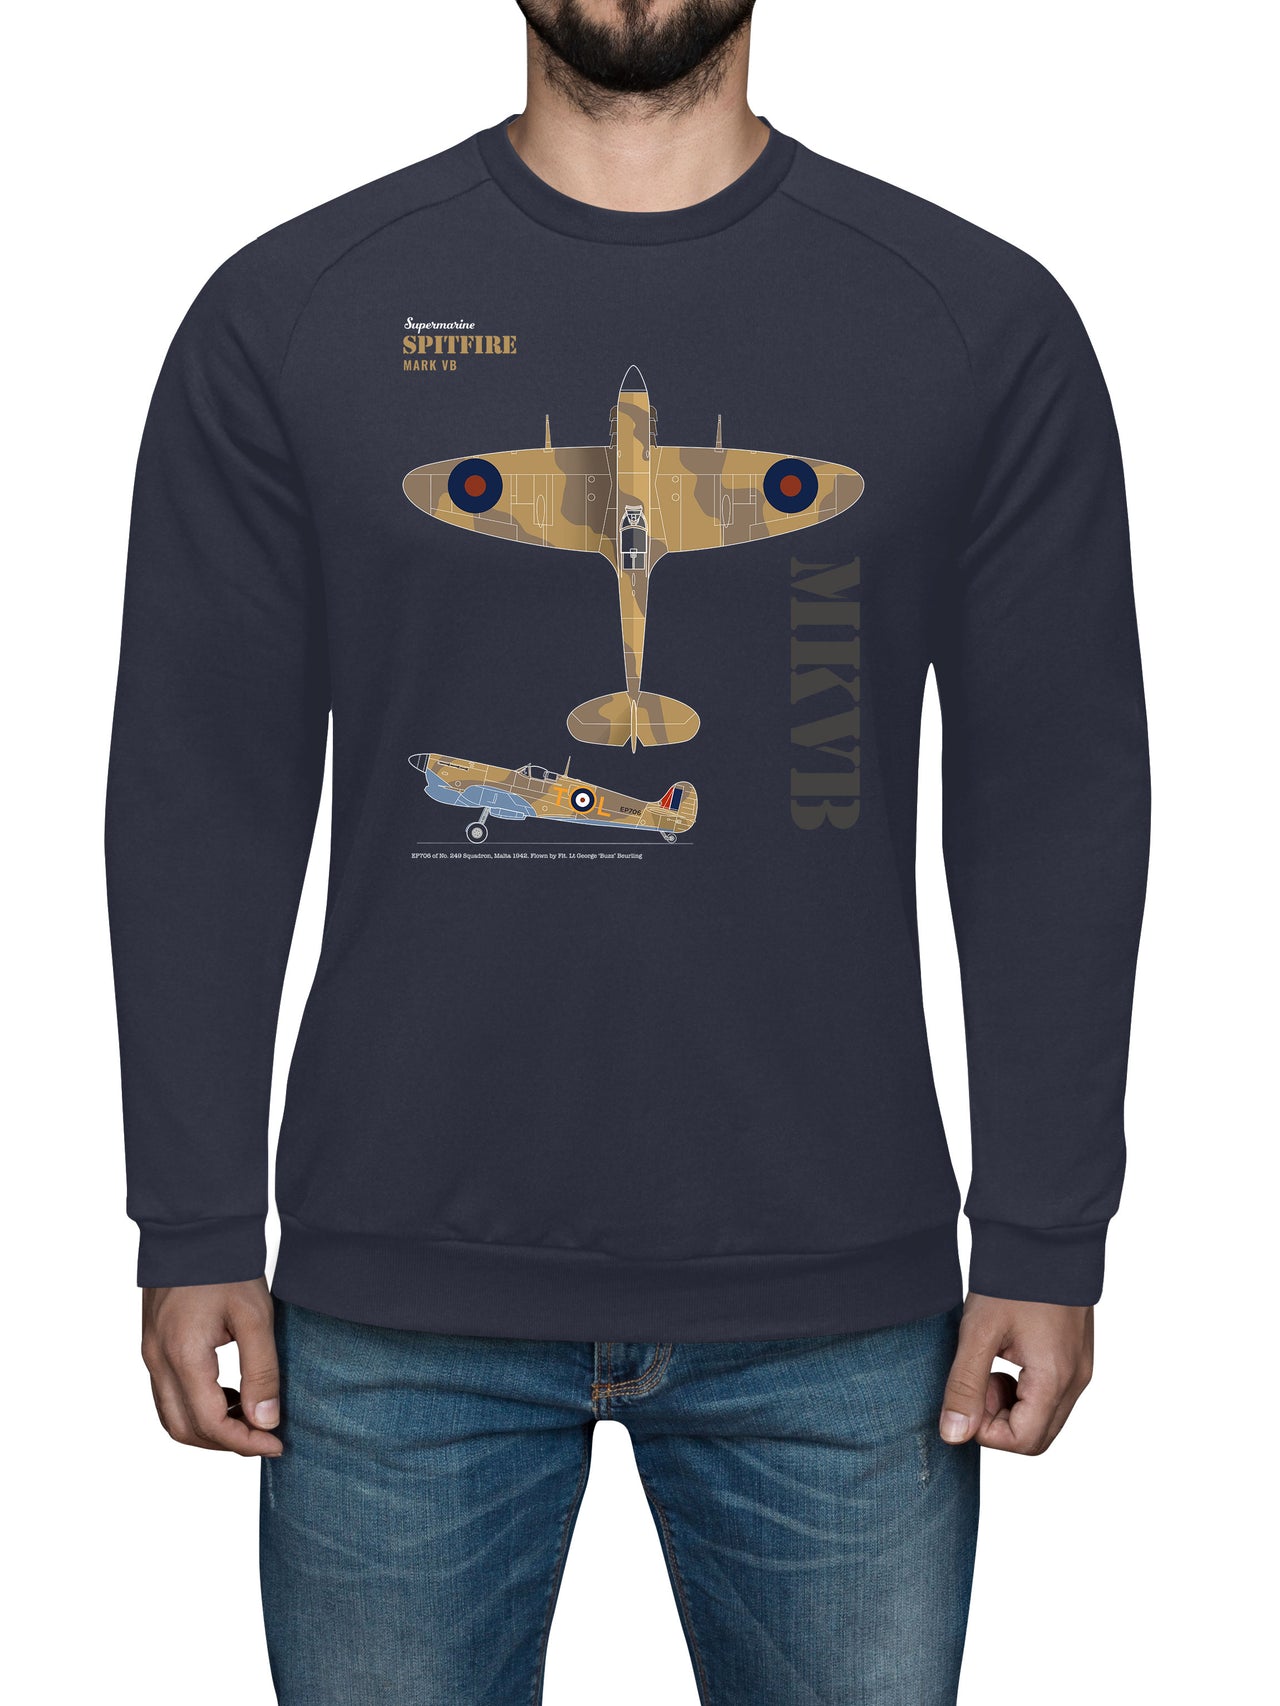 Spitfire MK VB - Sweat Shirt